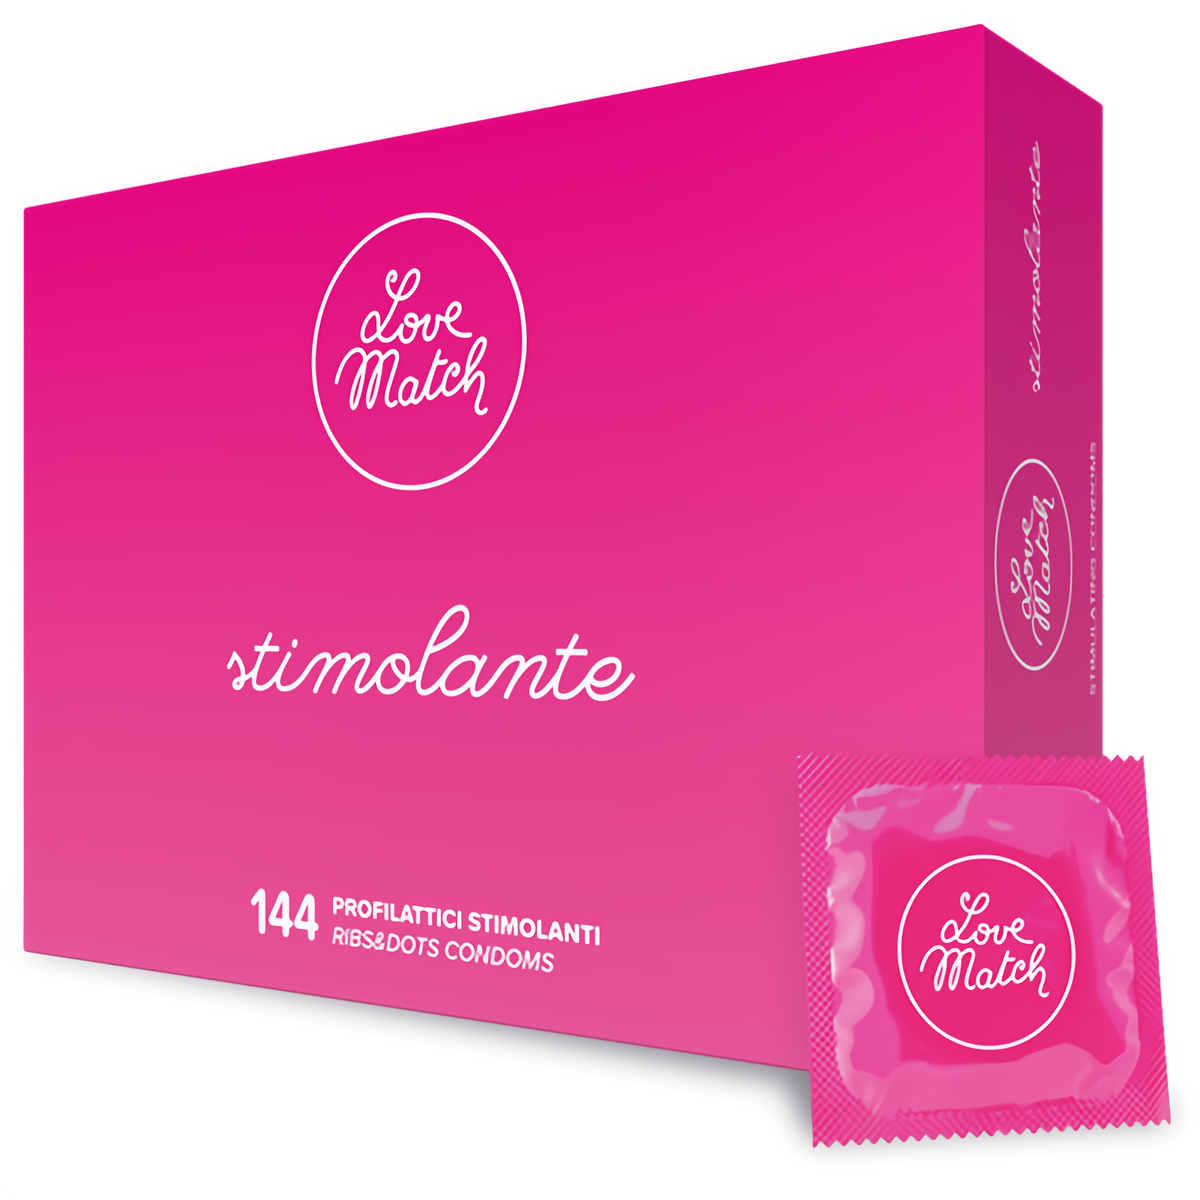 Stimolante - Ribs and Dots Condoms - 144 Pieces